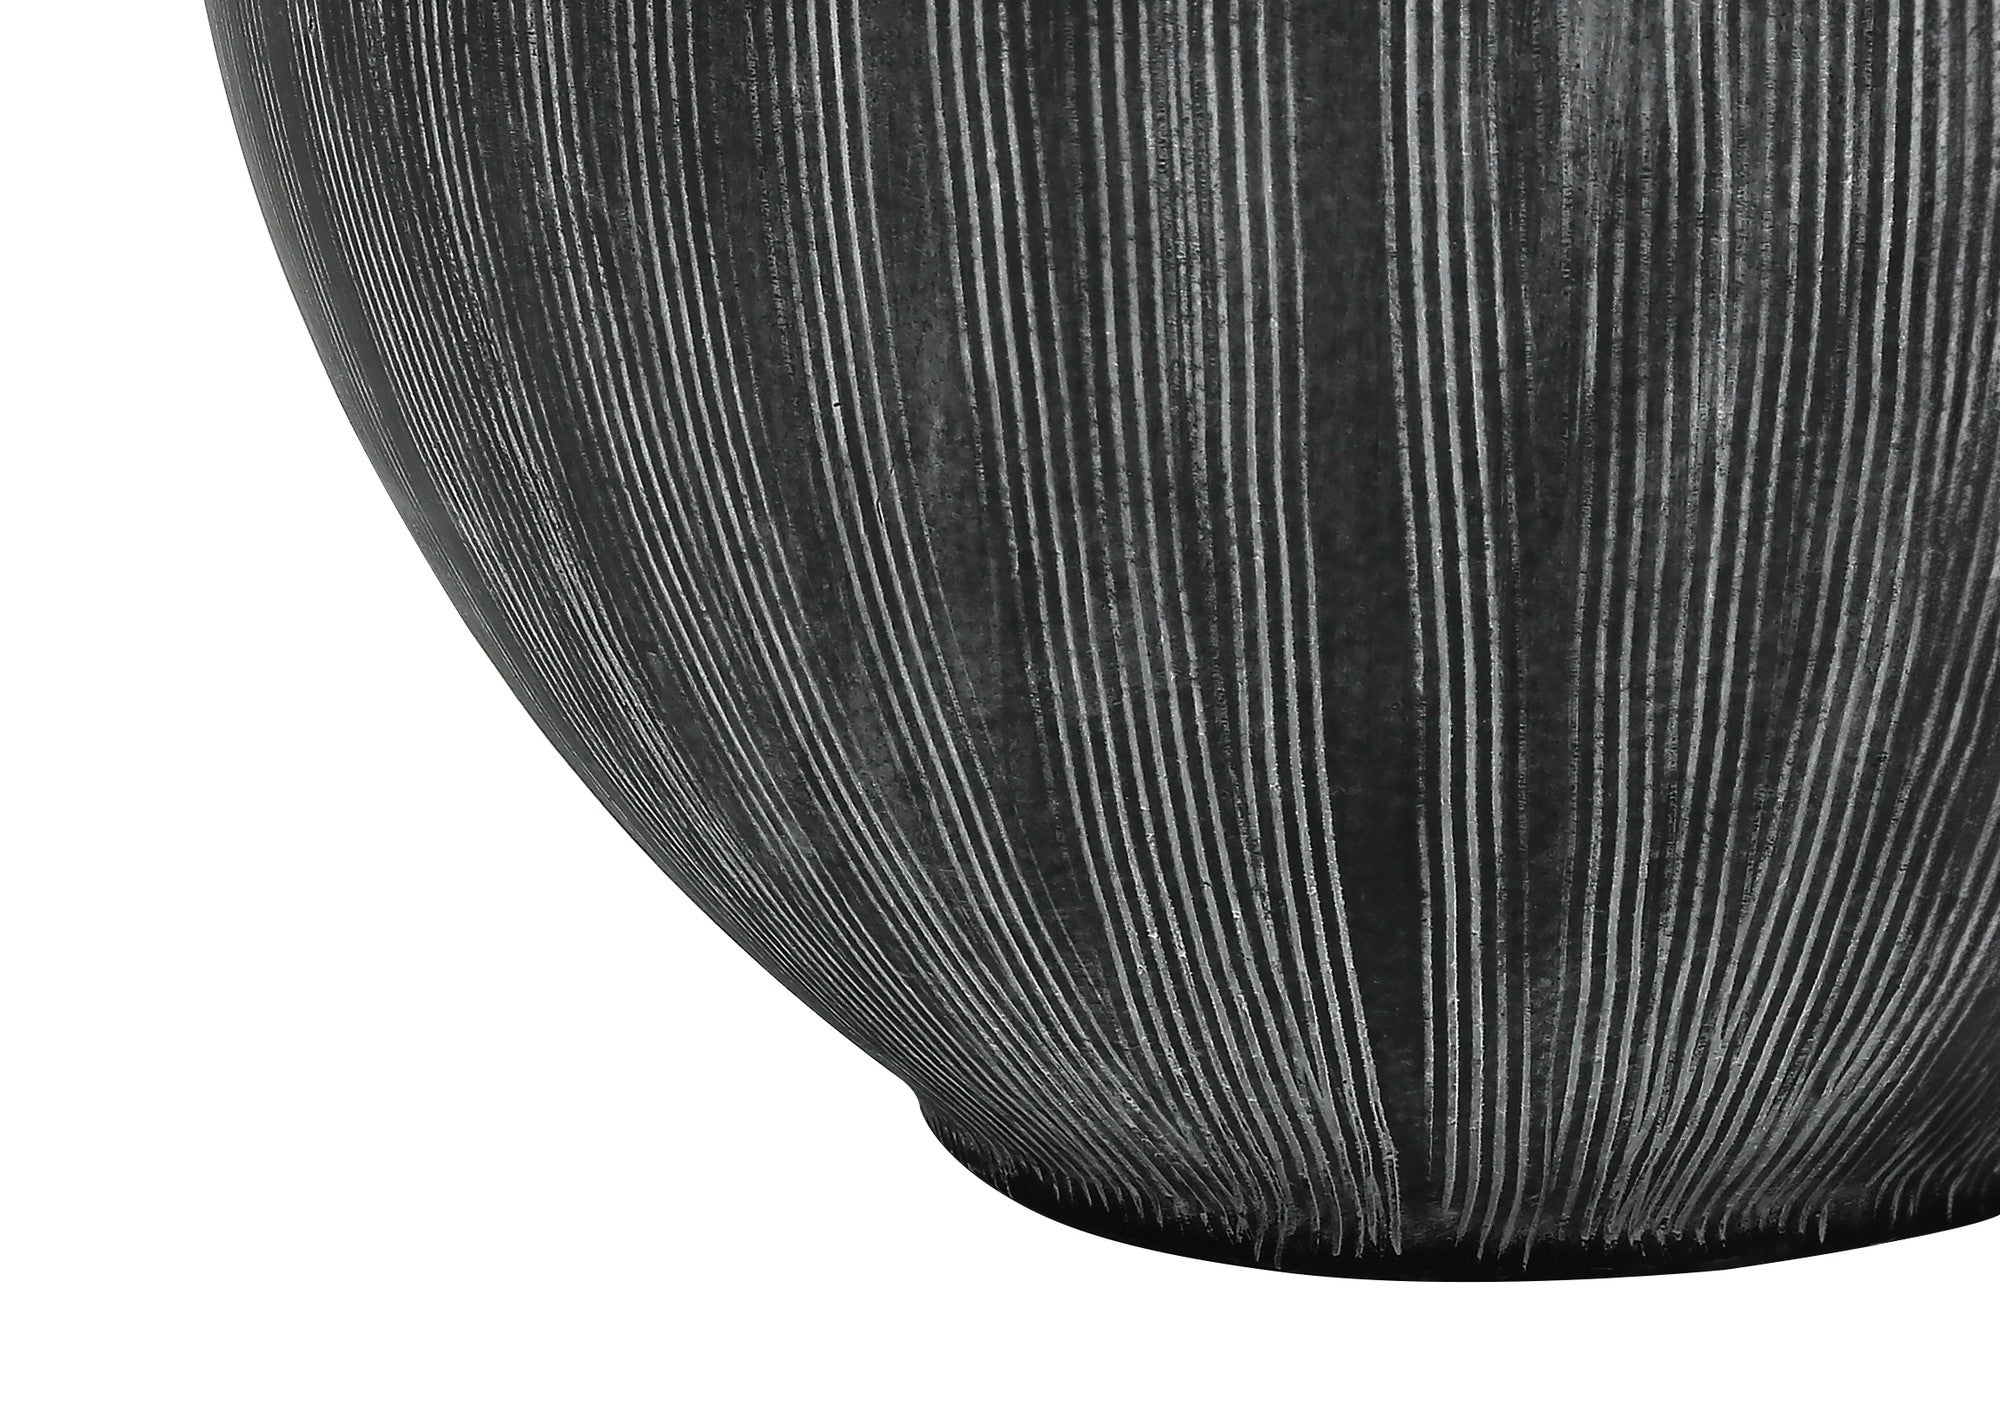 23" Black Ceramic Round Table Lamp With Black Drum Shade